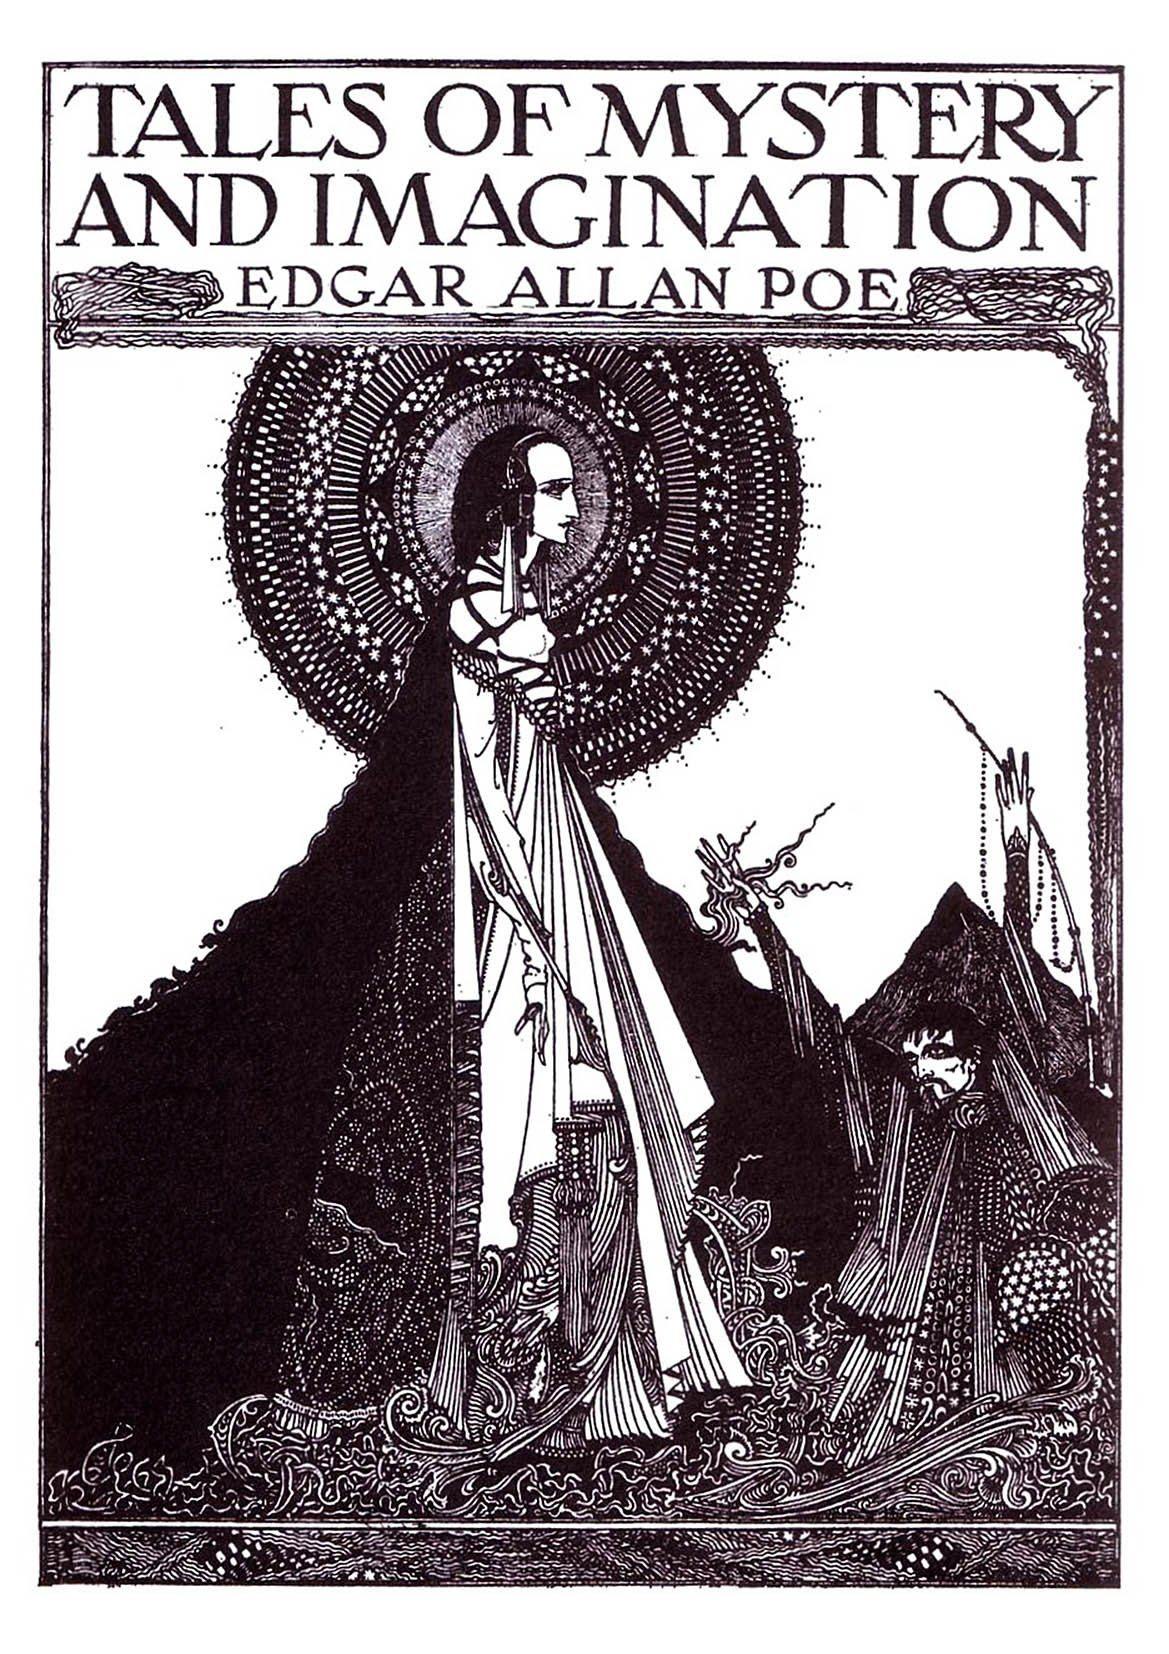 EDGAR ALLAN POE PRINT: Vintage Book Cover Art Poster - Pimlico Prints